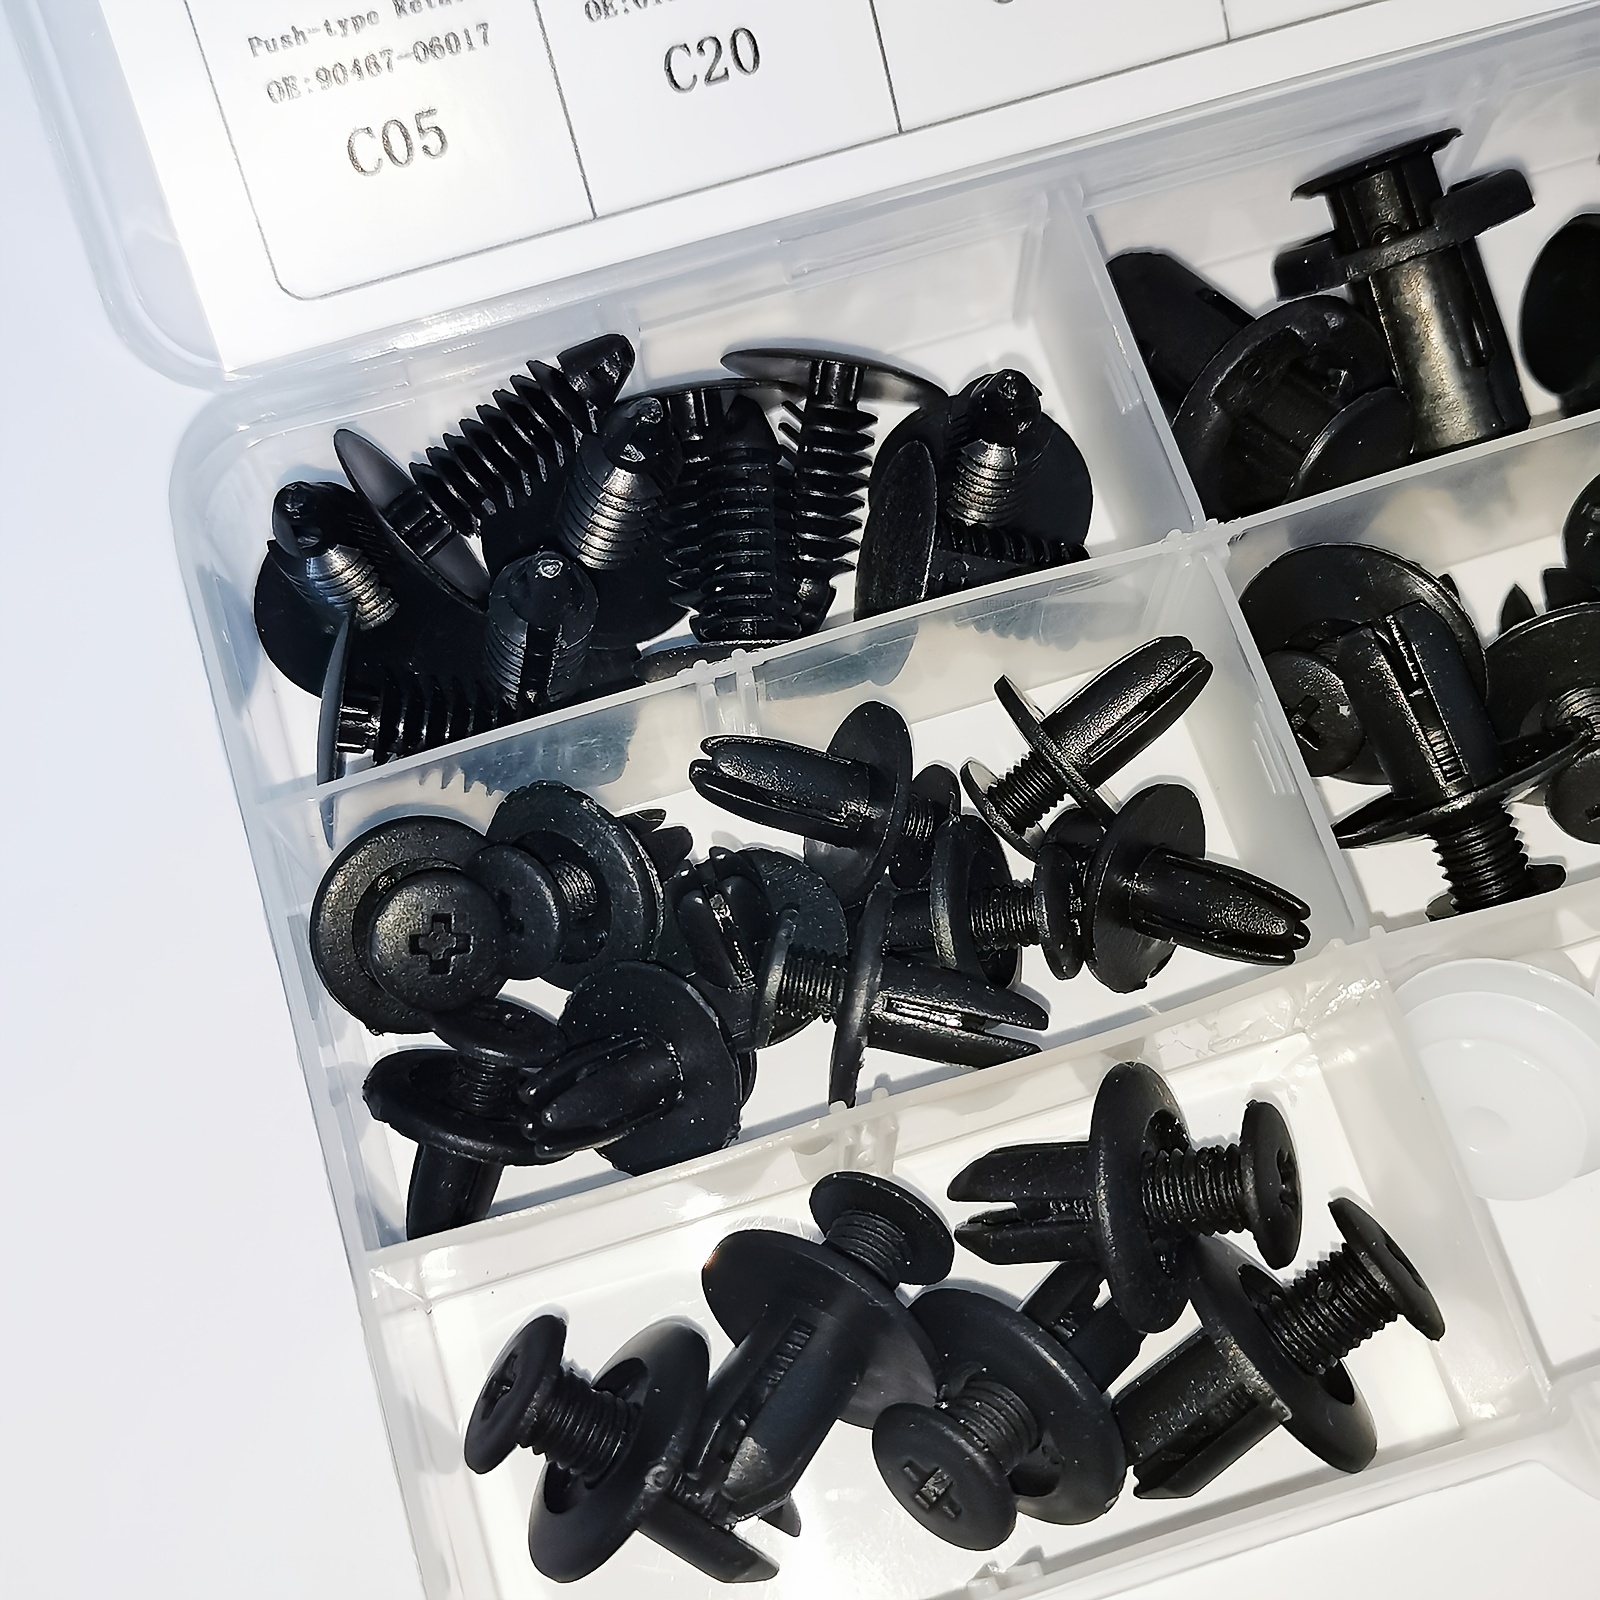 Essential Car Repair Tool Kit: Bumper Retainer Clips Plastic - Temu